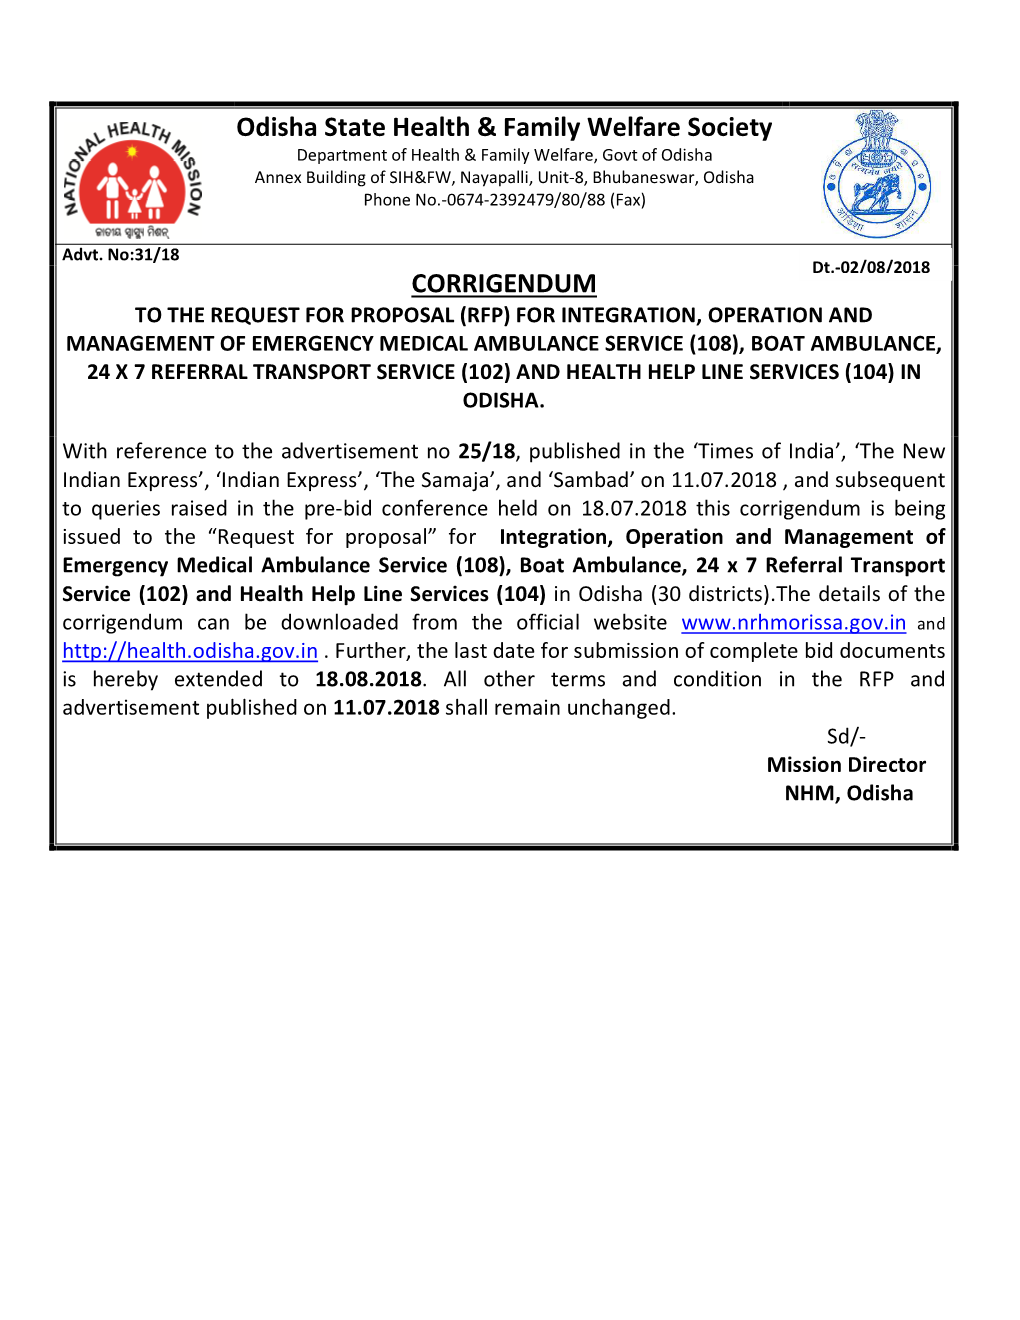 Odisha State Health & Family Welfare Society CORRIGENDUM